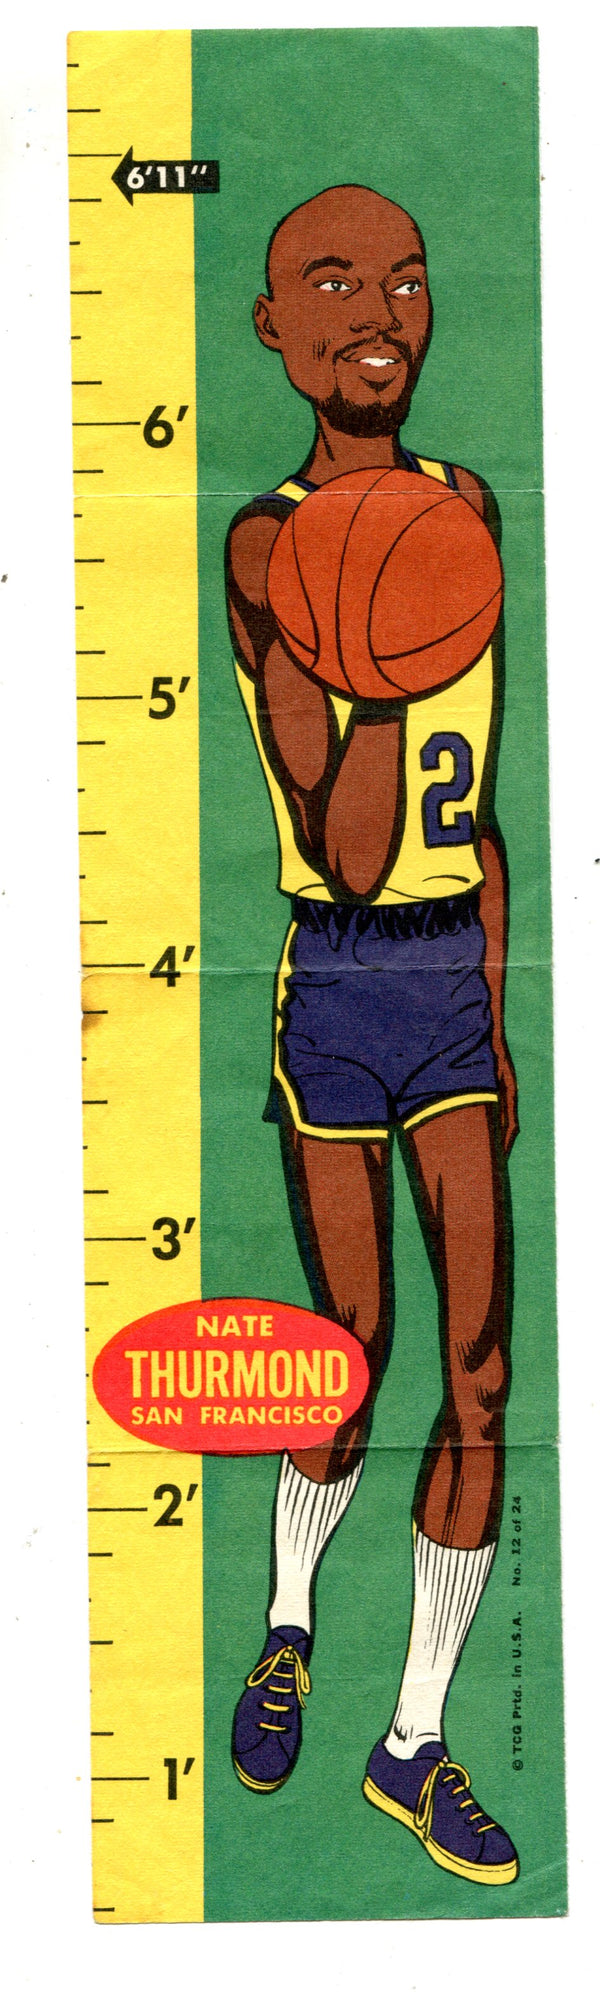 Nate Thurmond 1969 Topps Rulers Card